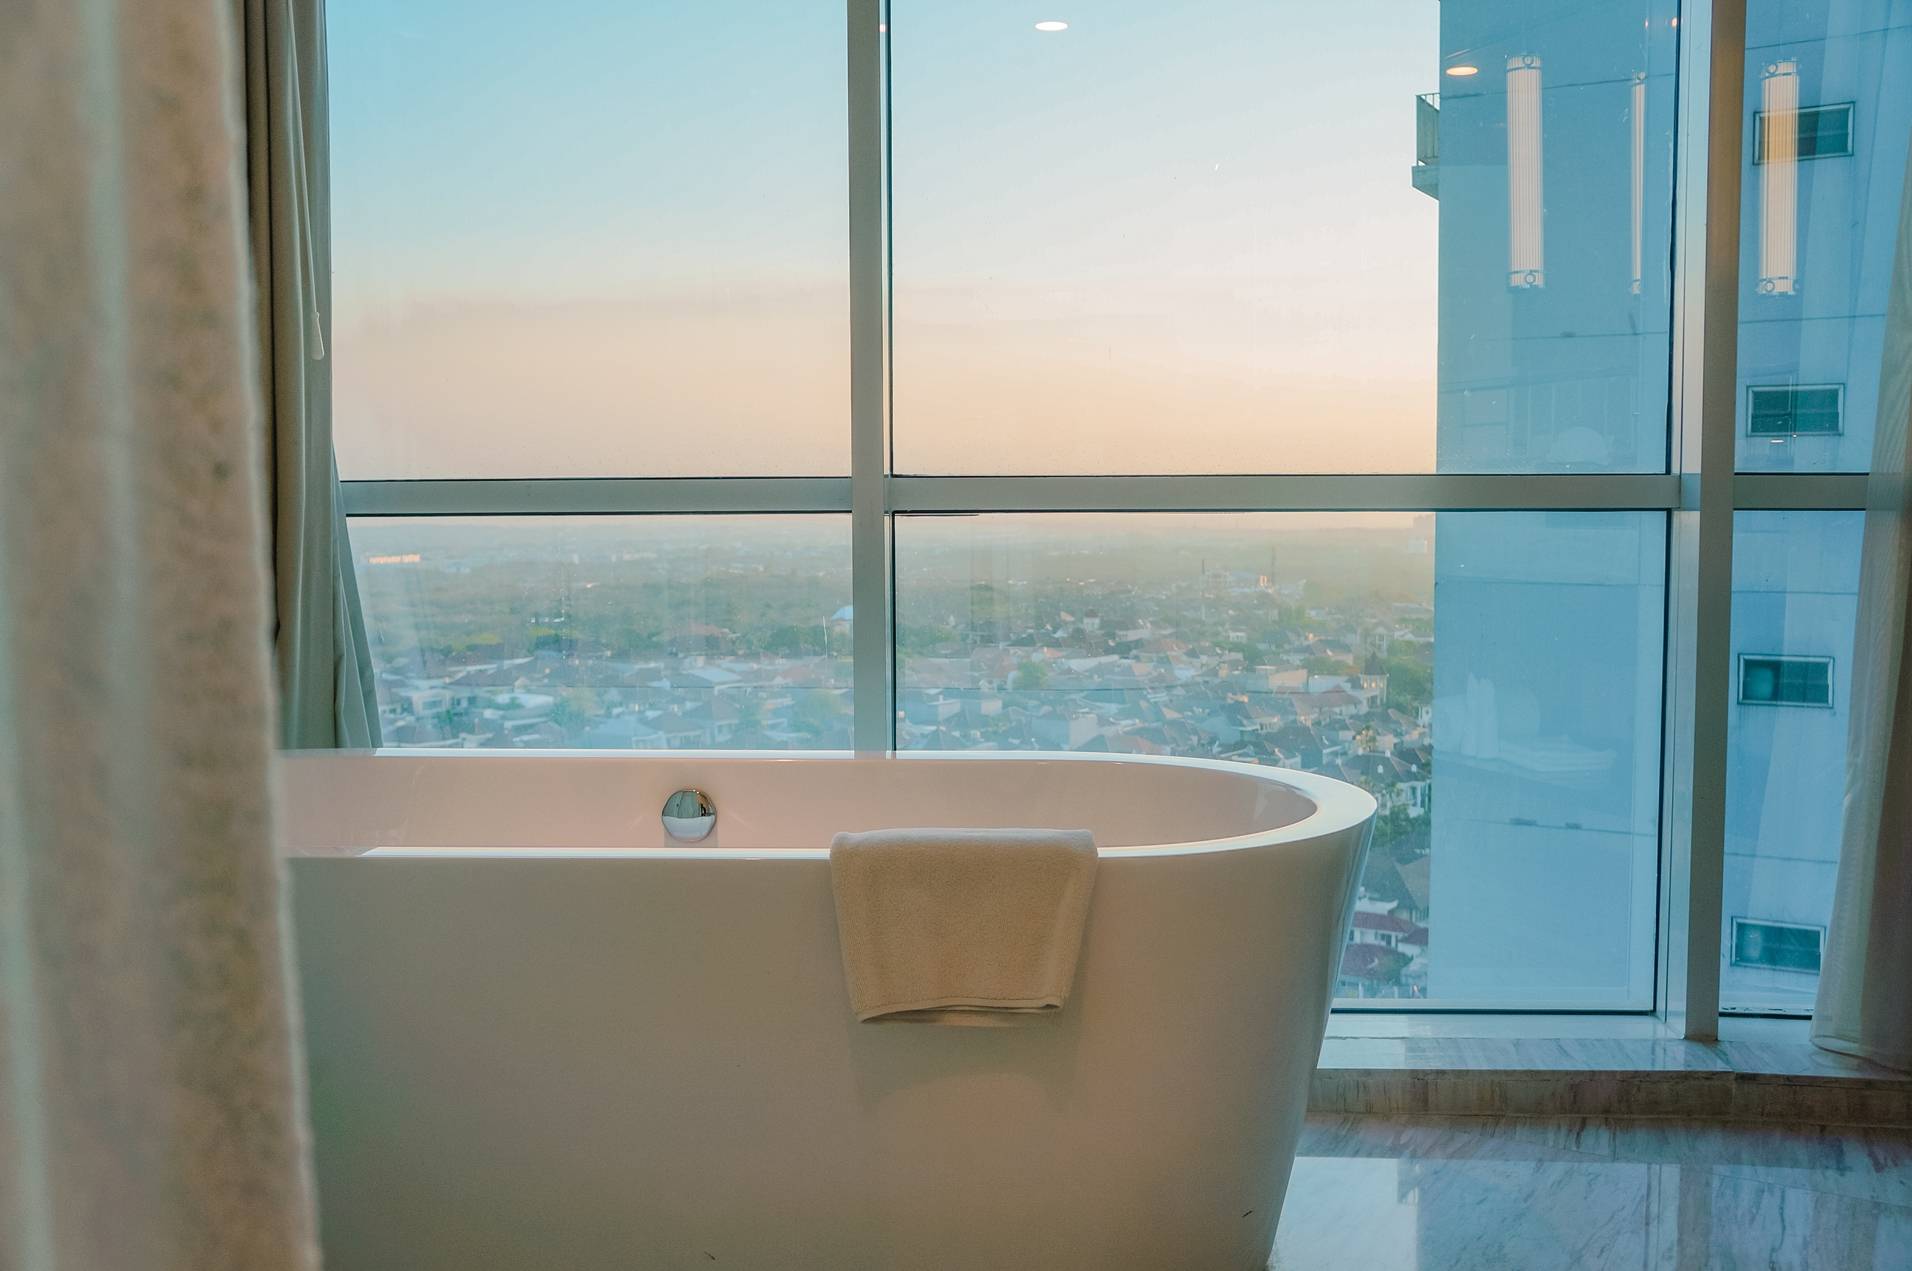 Bathtub dengan pemandangan indah (c) Willy/travelingyuk